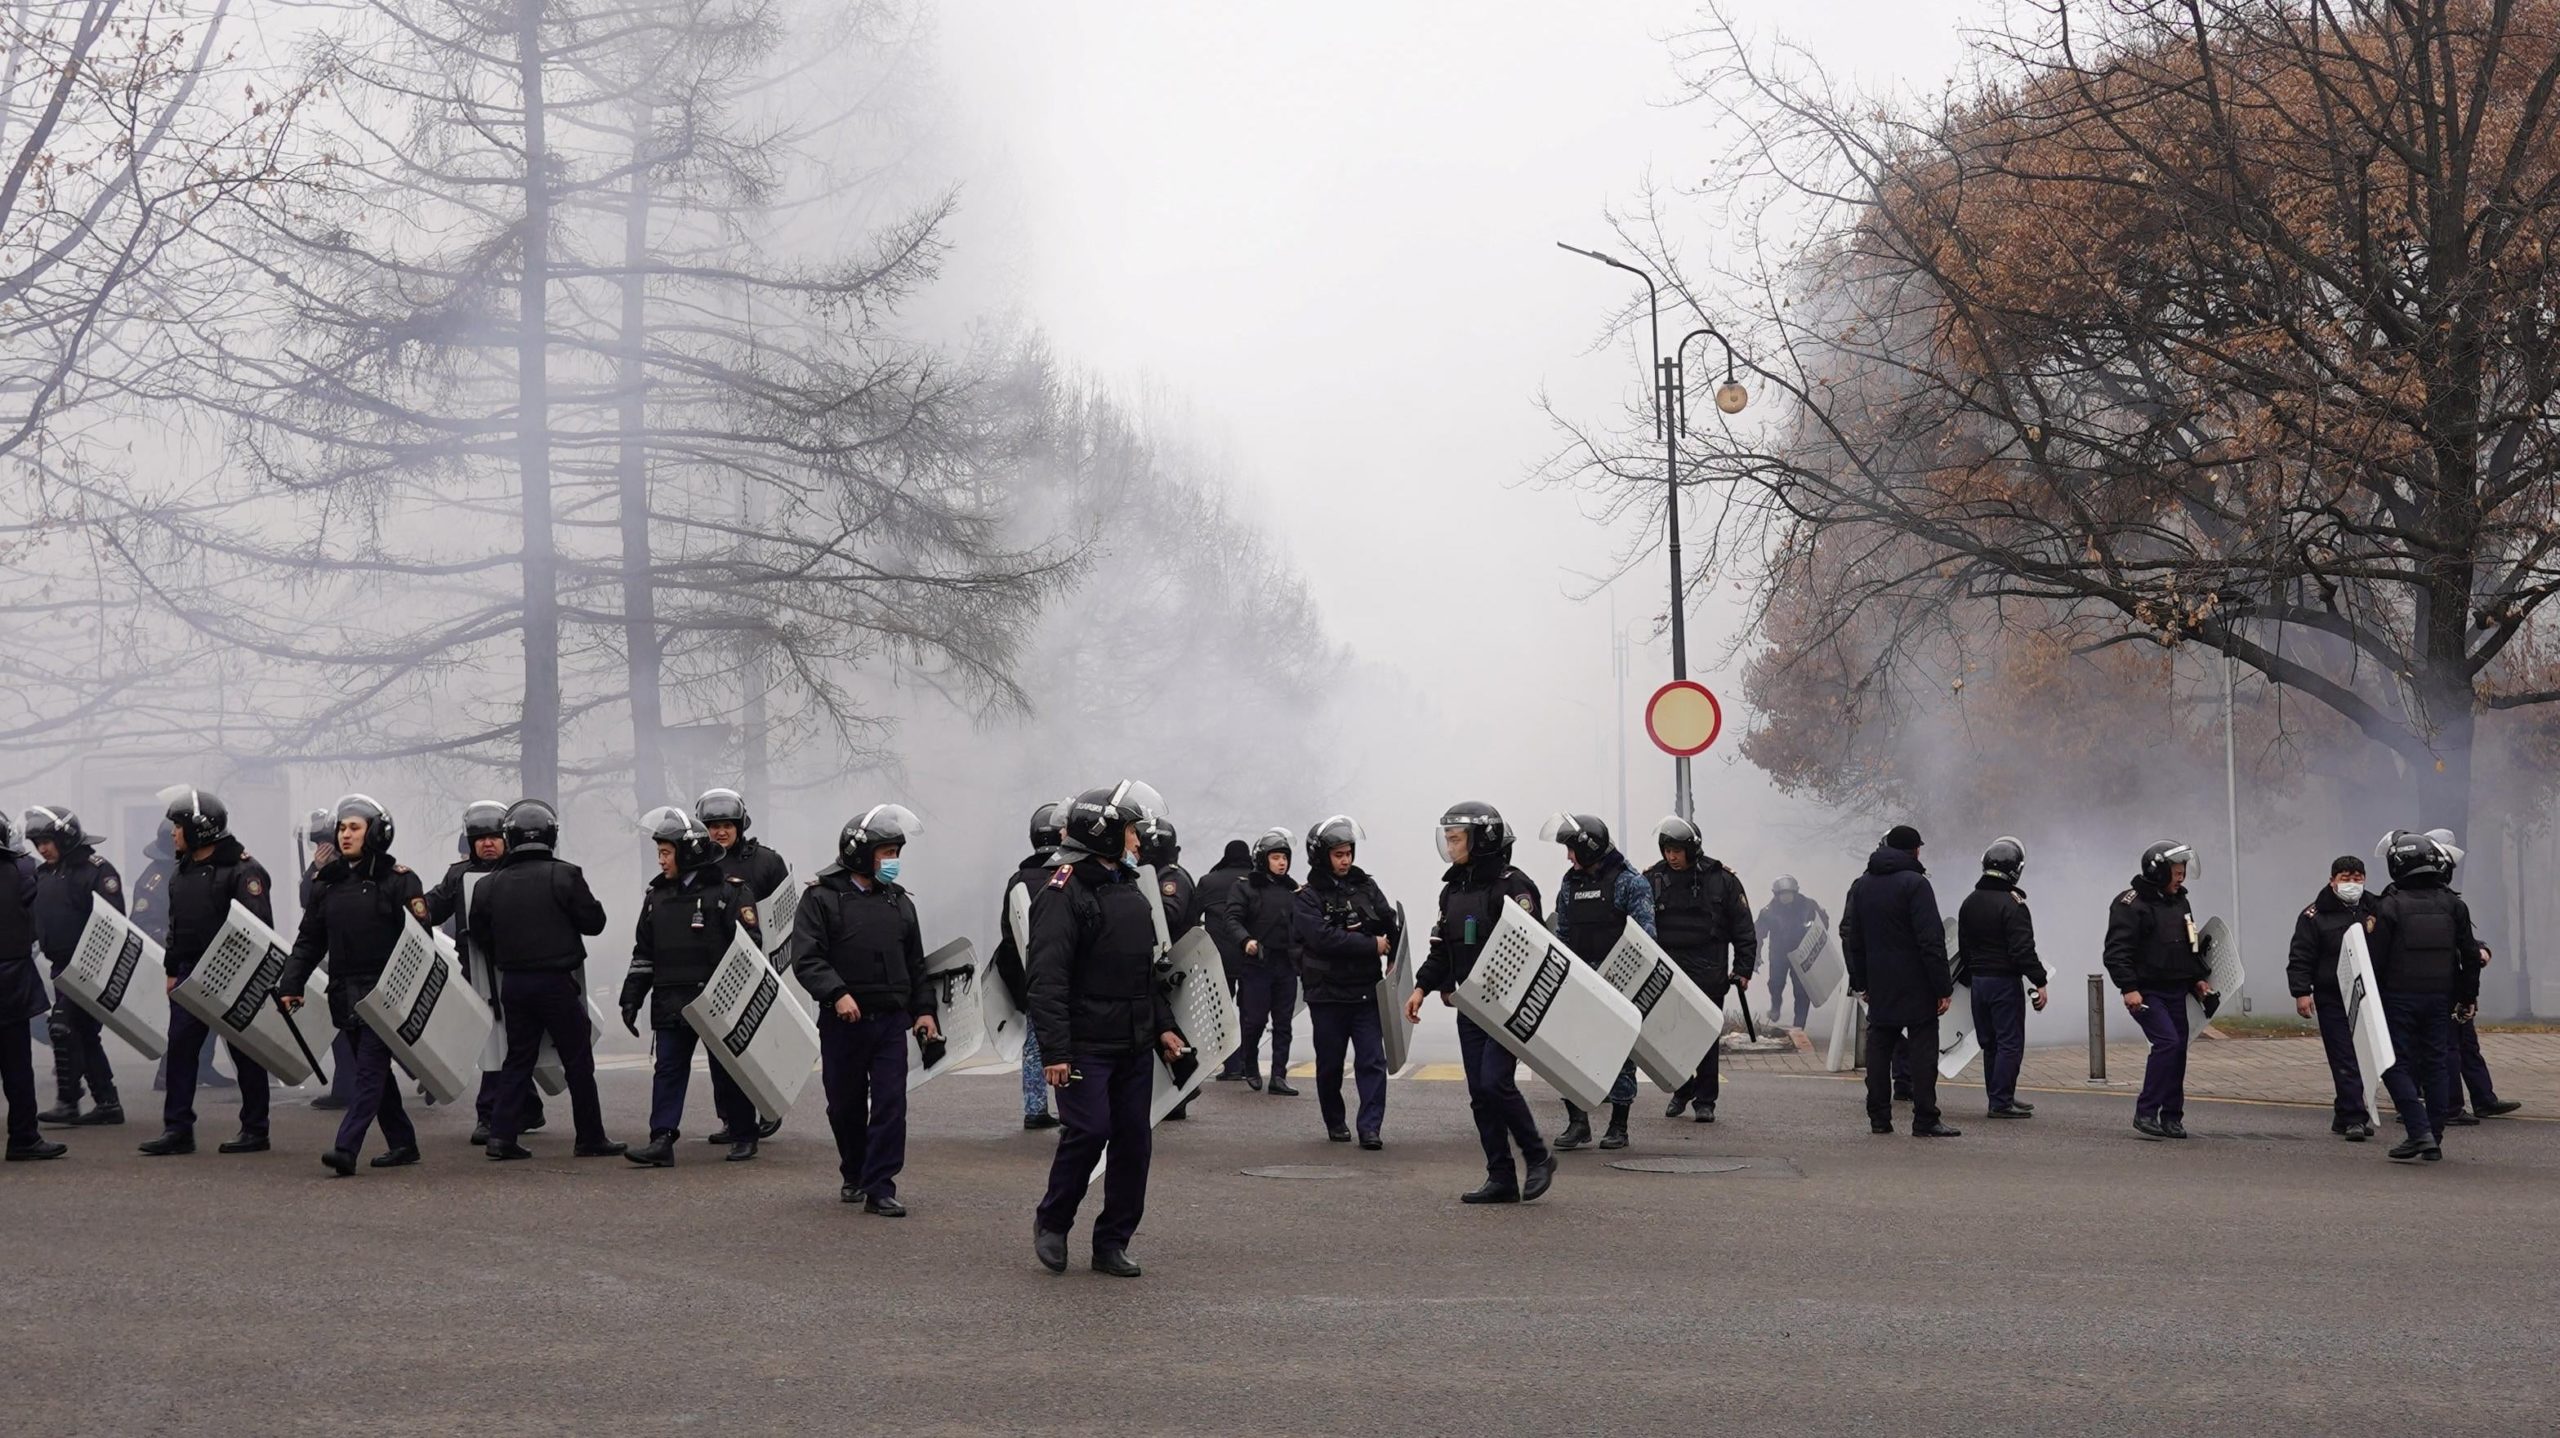  Riot police in Almaty, Kazakhstan on January 5, 2022. (Photo: ABDUAZIZ MADYAROV/AFP, Getty Images)